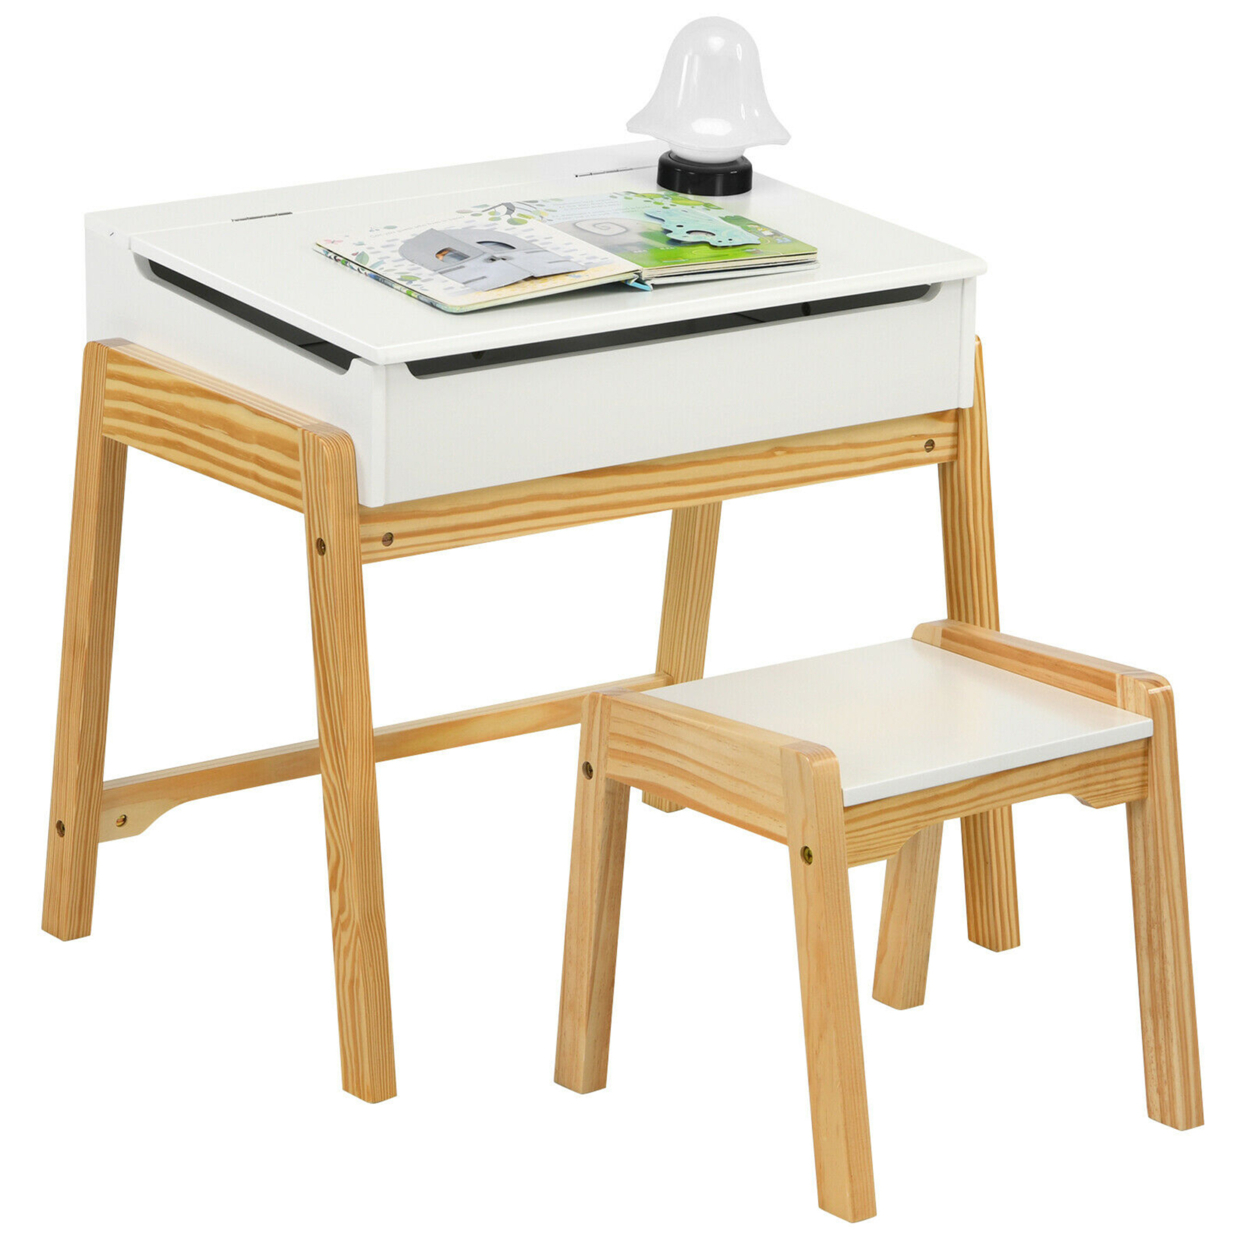 Kids Table & Chair Set Wooden Activity Art Study Desk W/Storage Space - White